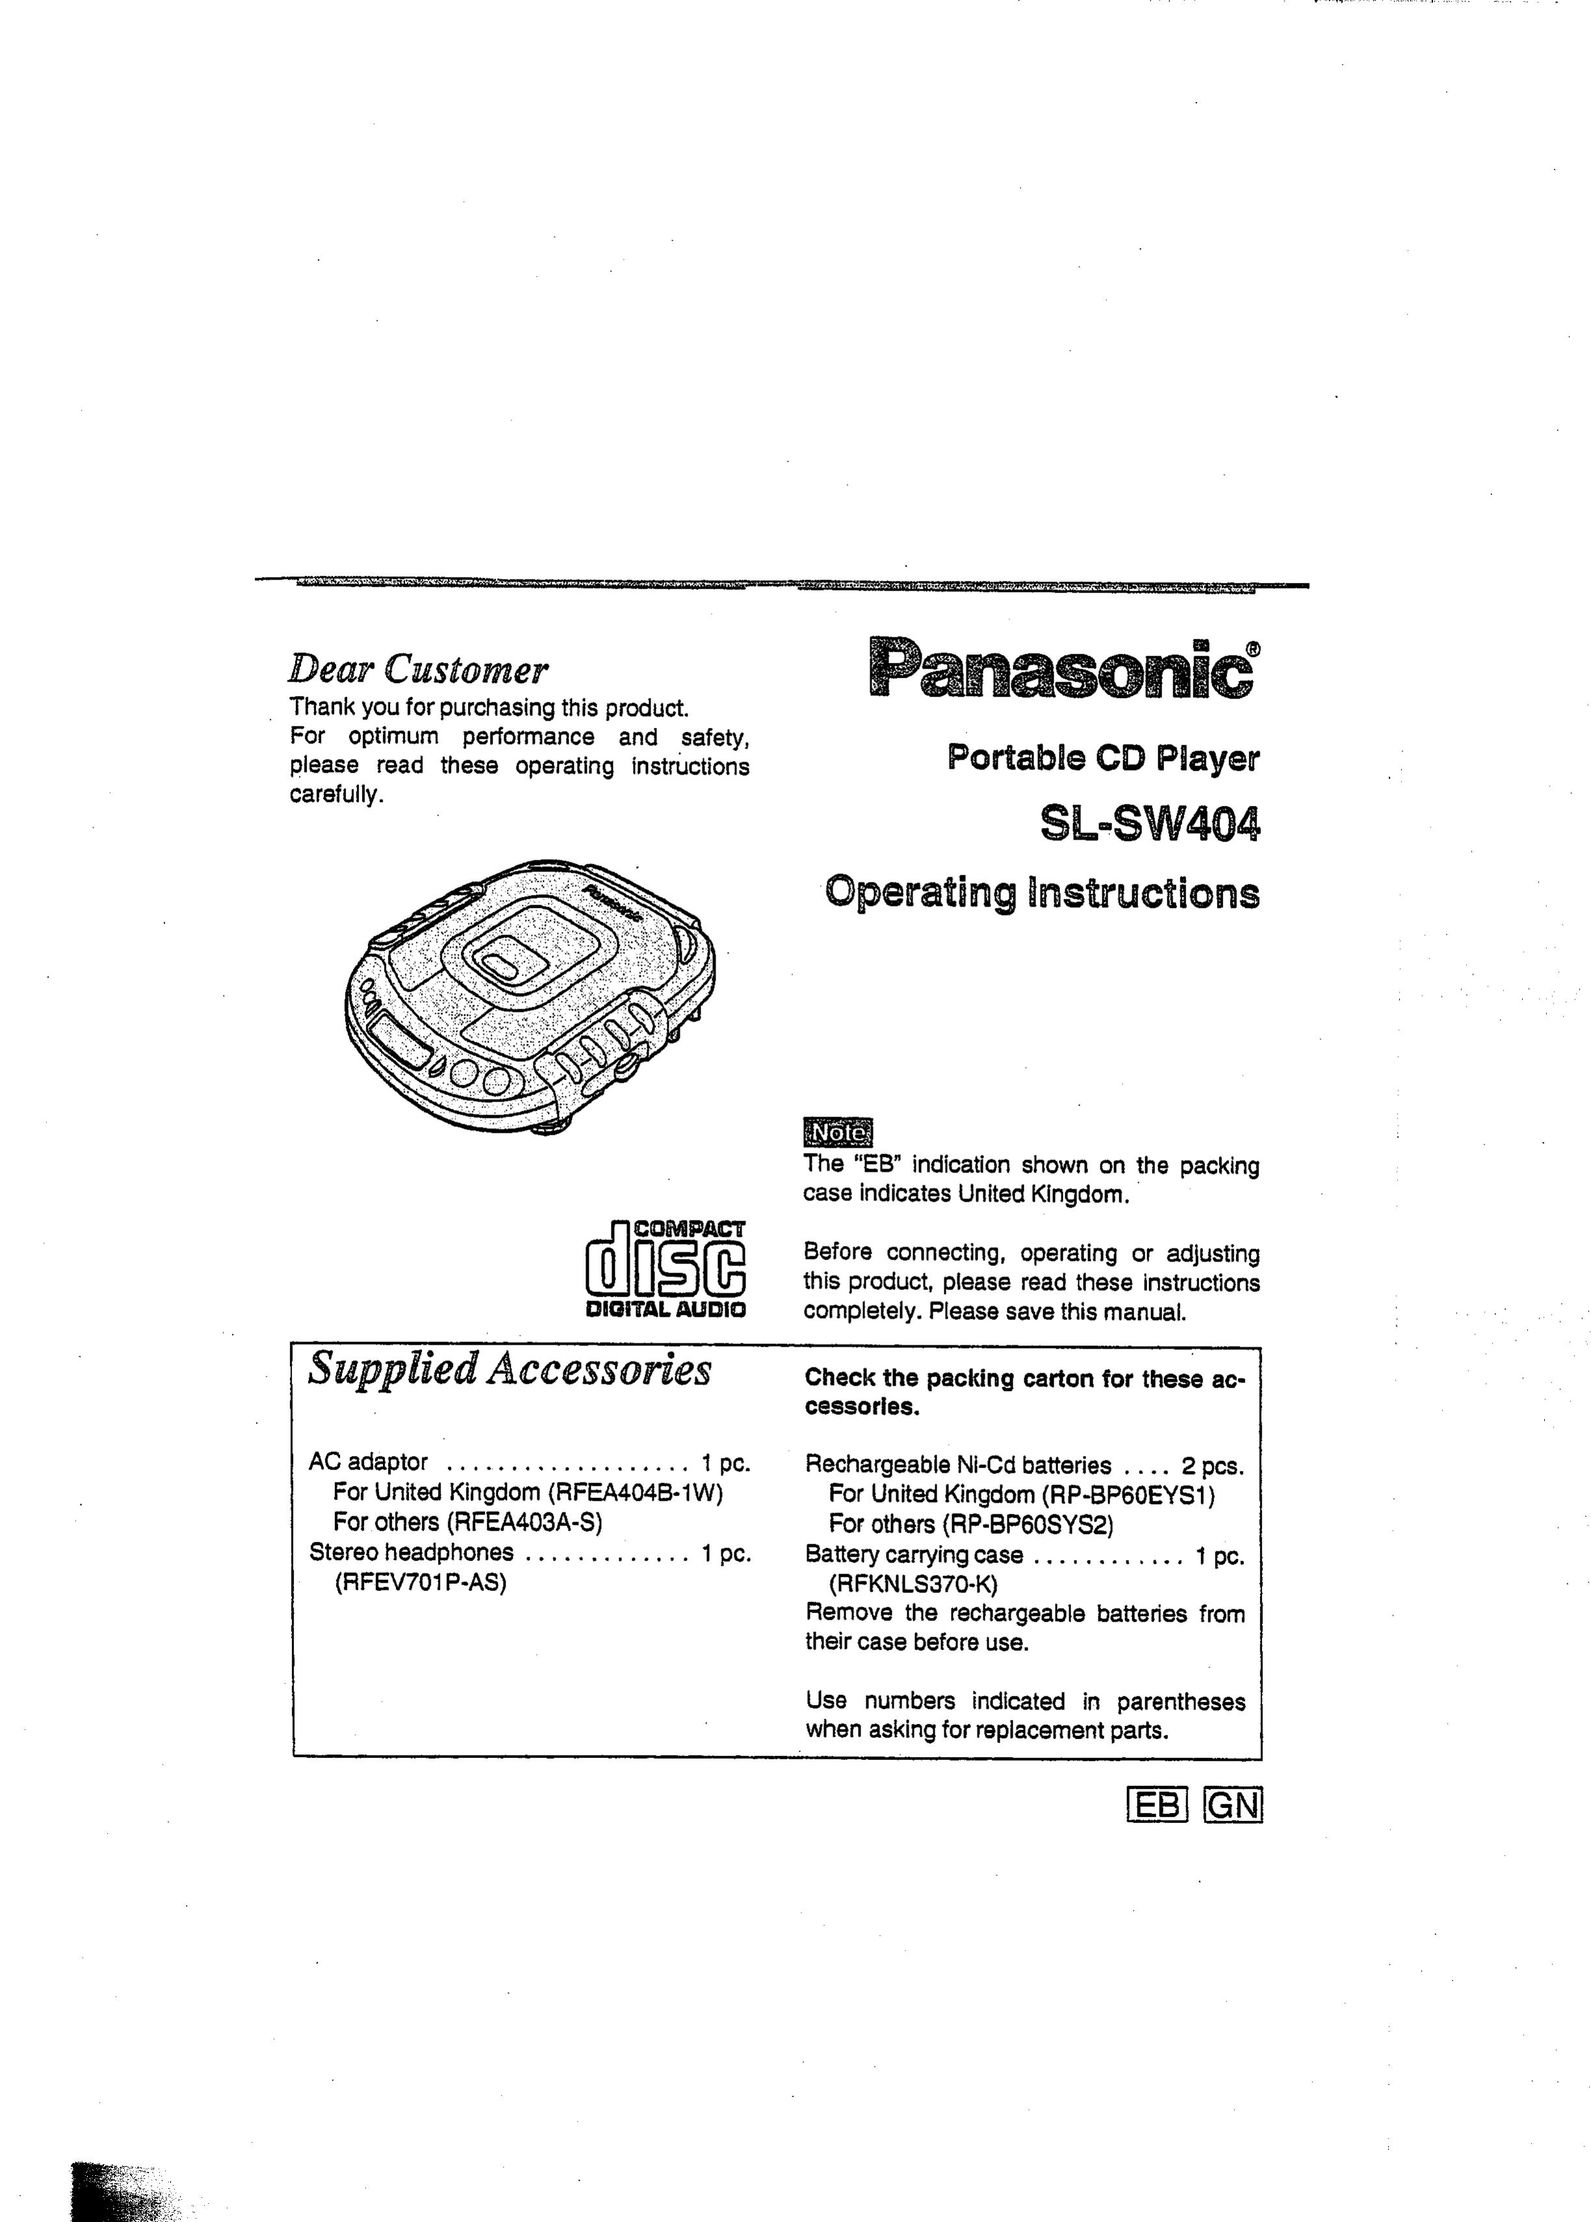 Panasonic SL-SW404 Portable CD Player User Manual